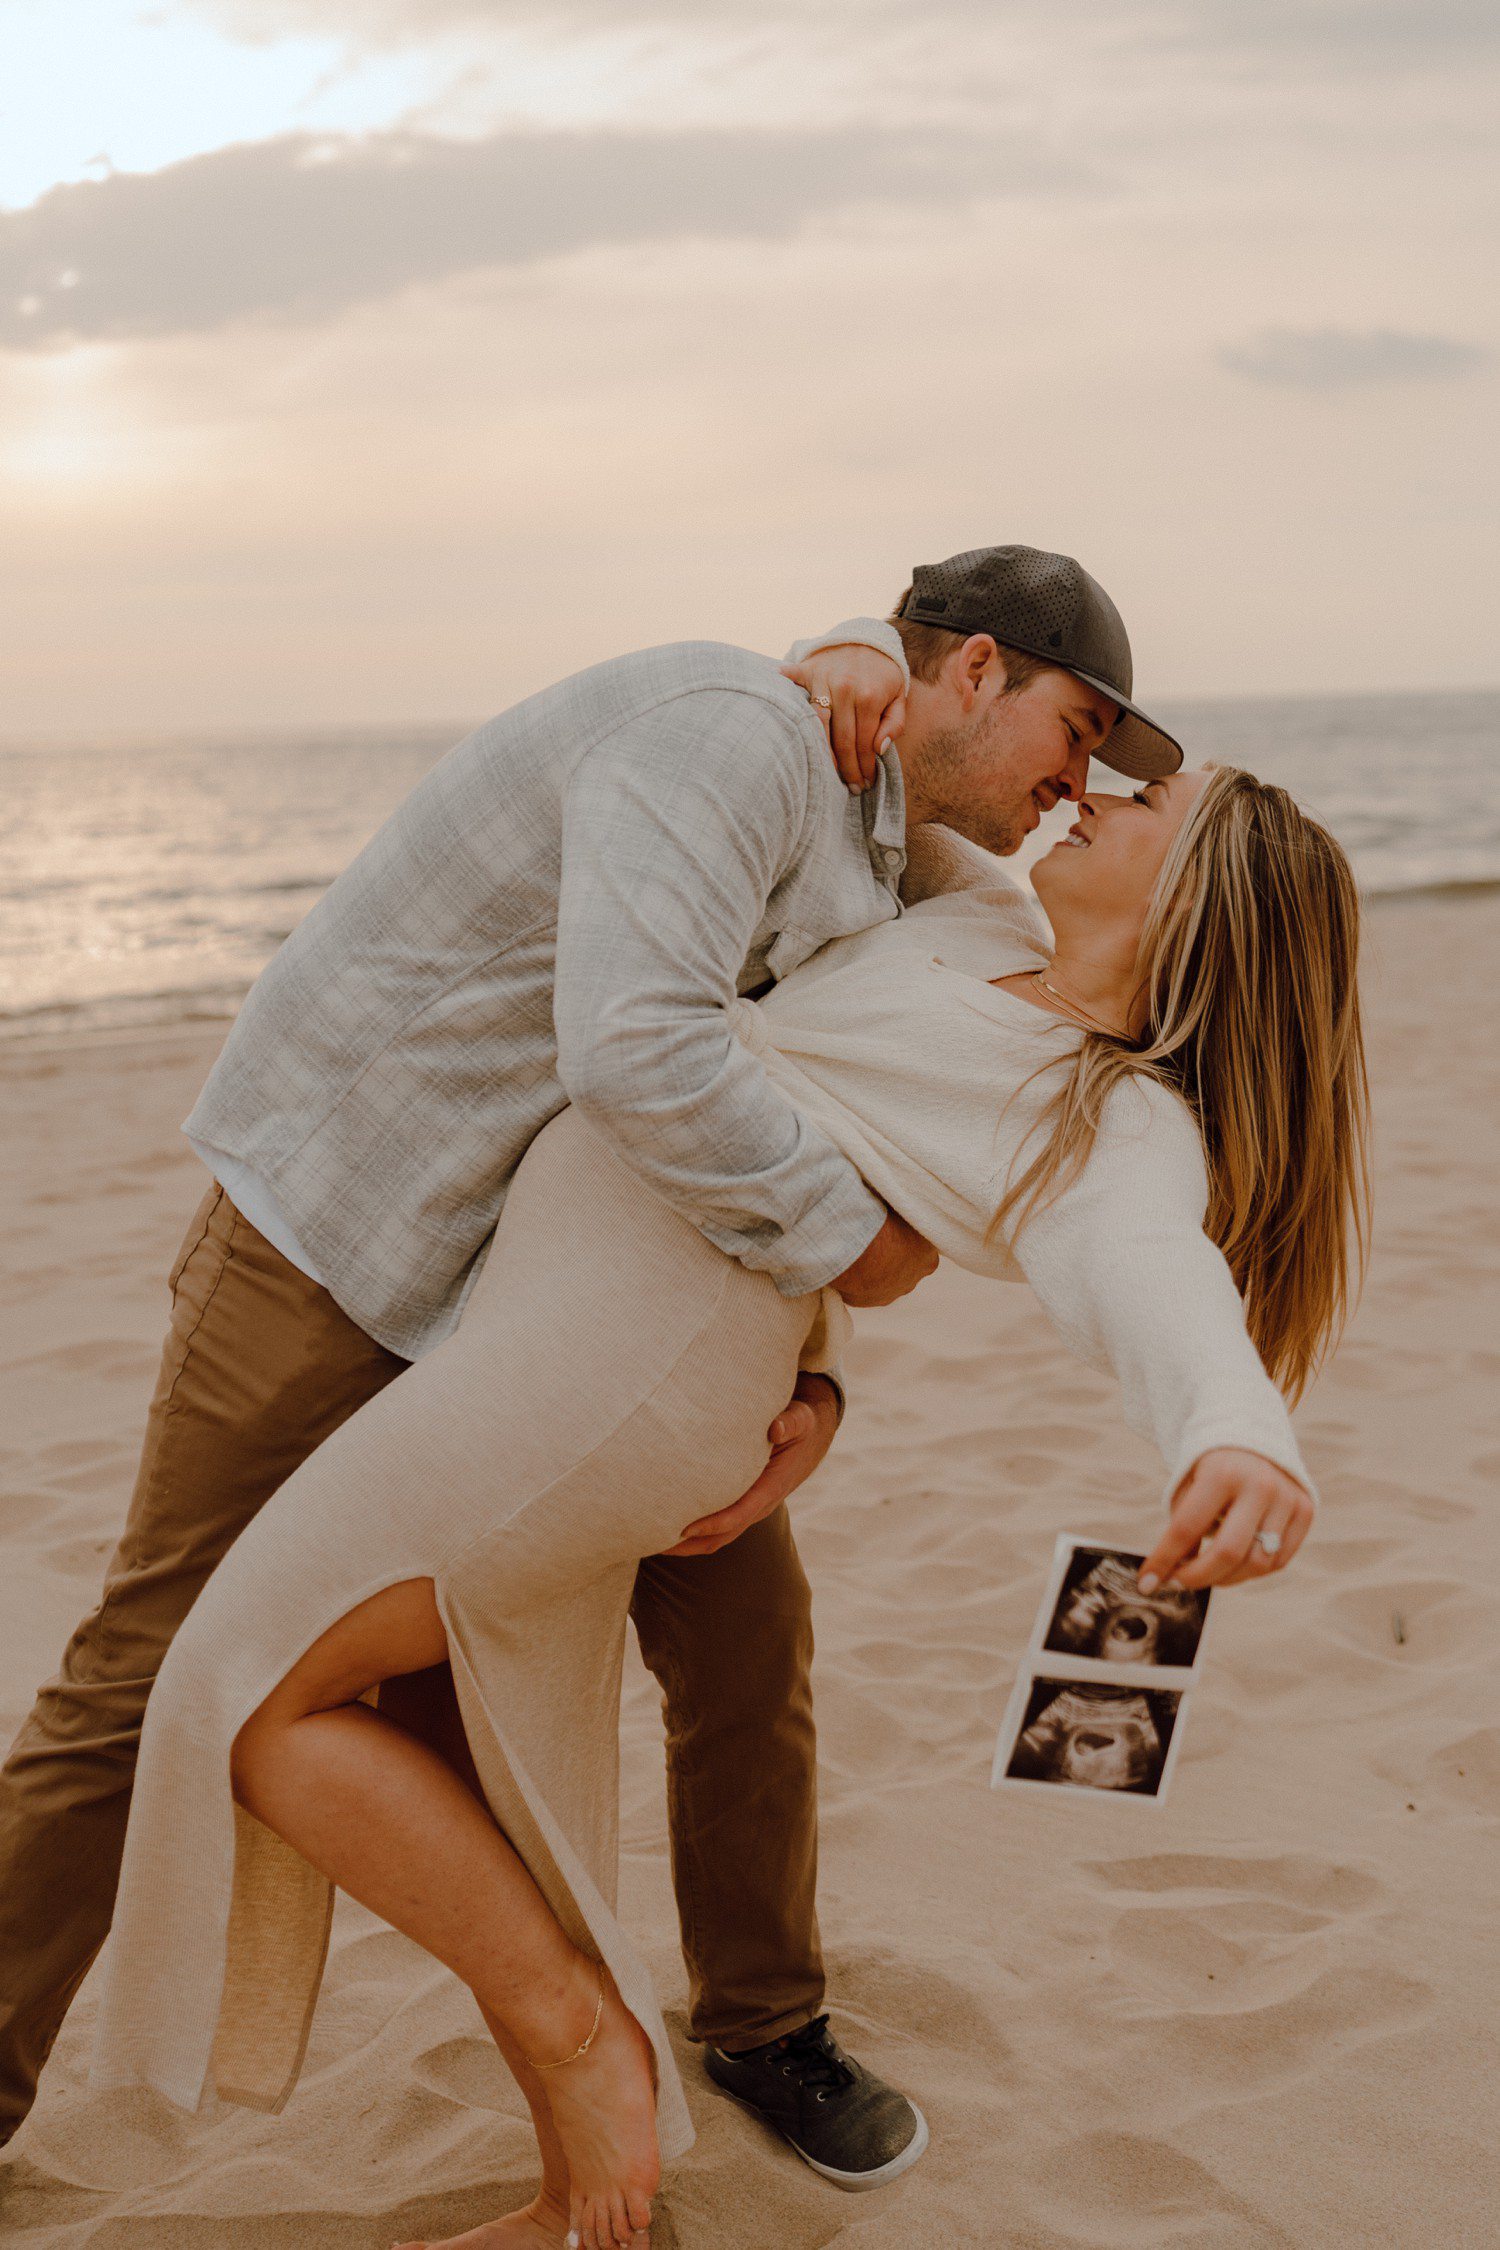 Lake Michigan Pregnancy announcement photos with sonogram